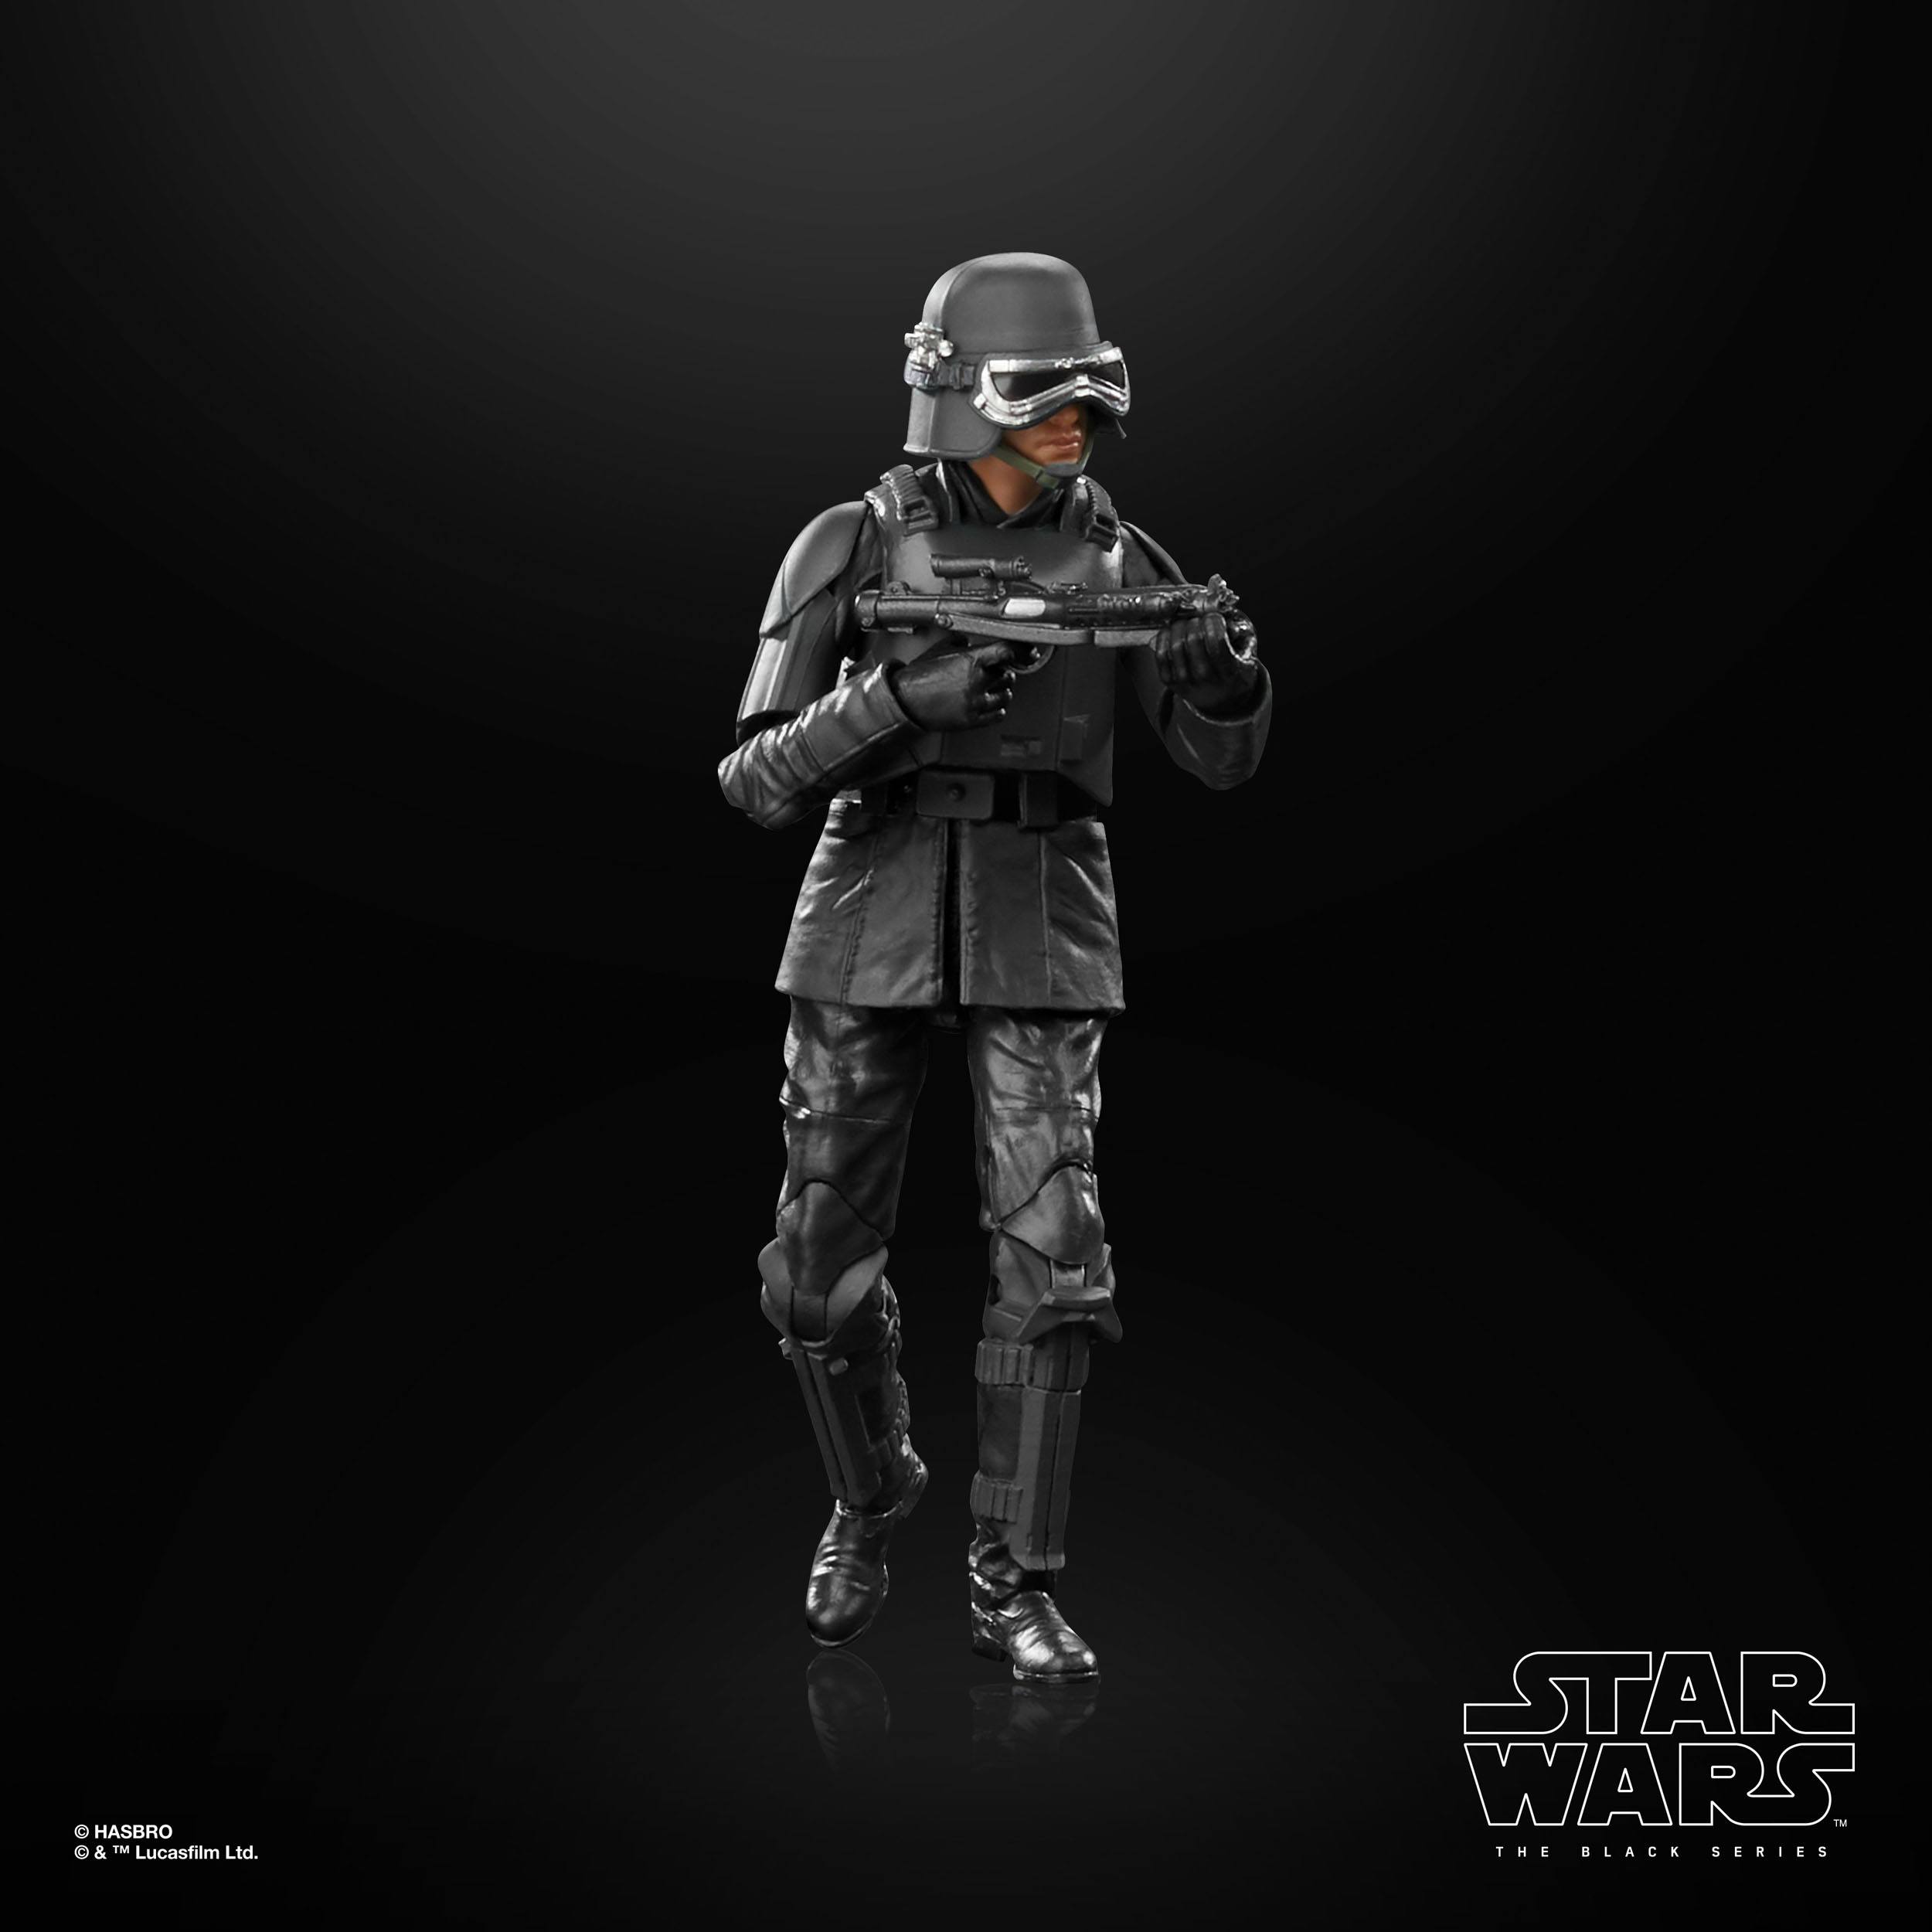 VP leicht beschädigt! Star Wars The Black Series Imperial Officer (Ferrix)  F56015L0 5010994163525